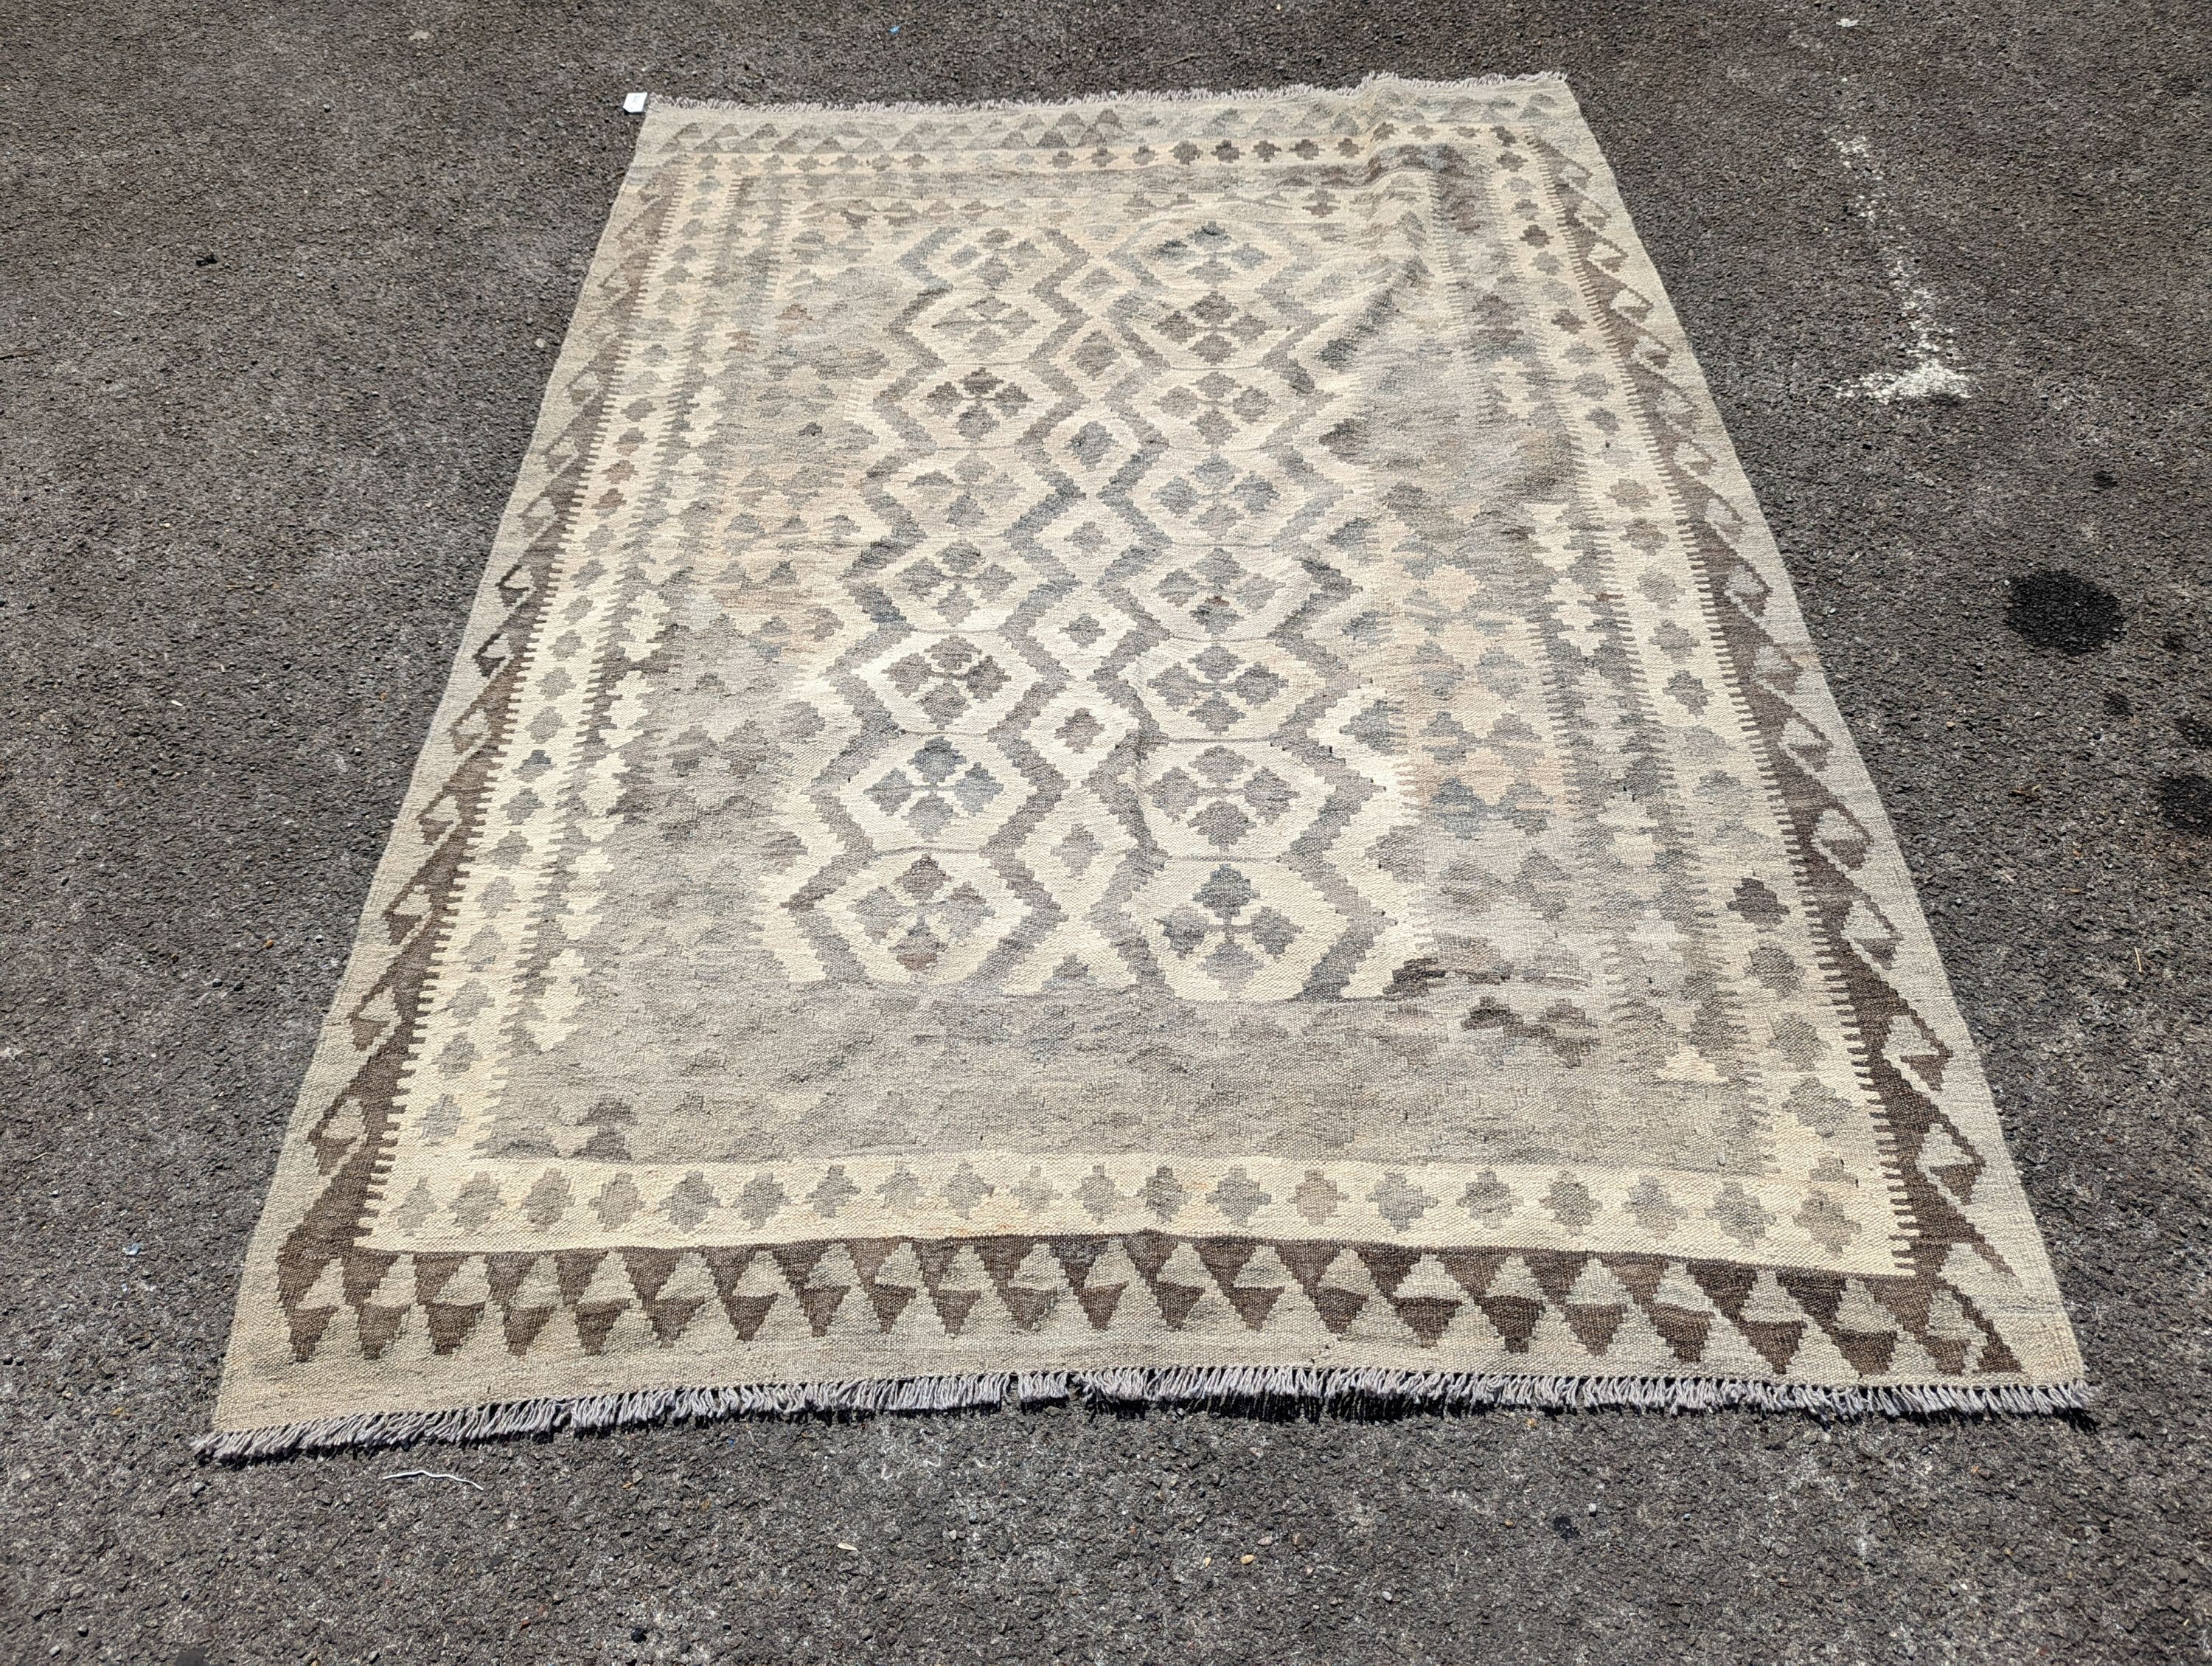 An Anatolian monochrome geometric flatweave carpet, 230 x 175cm